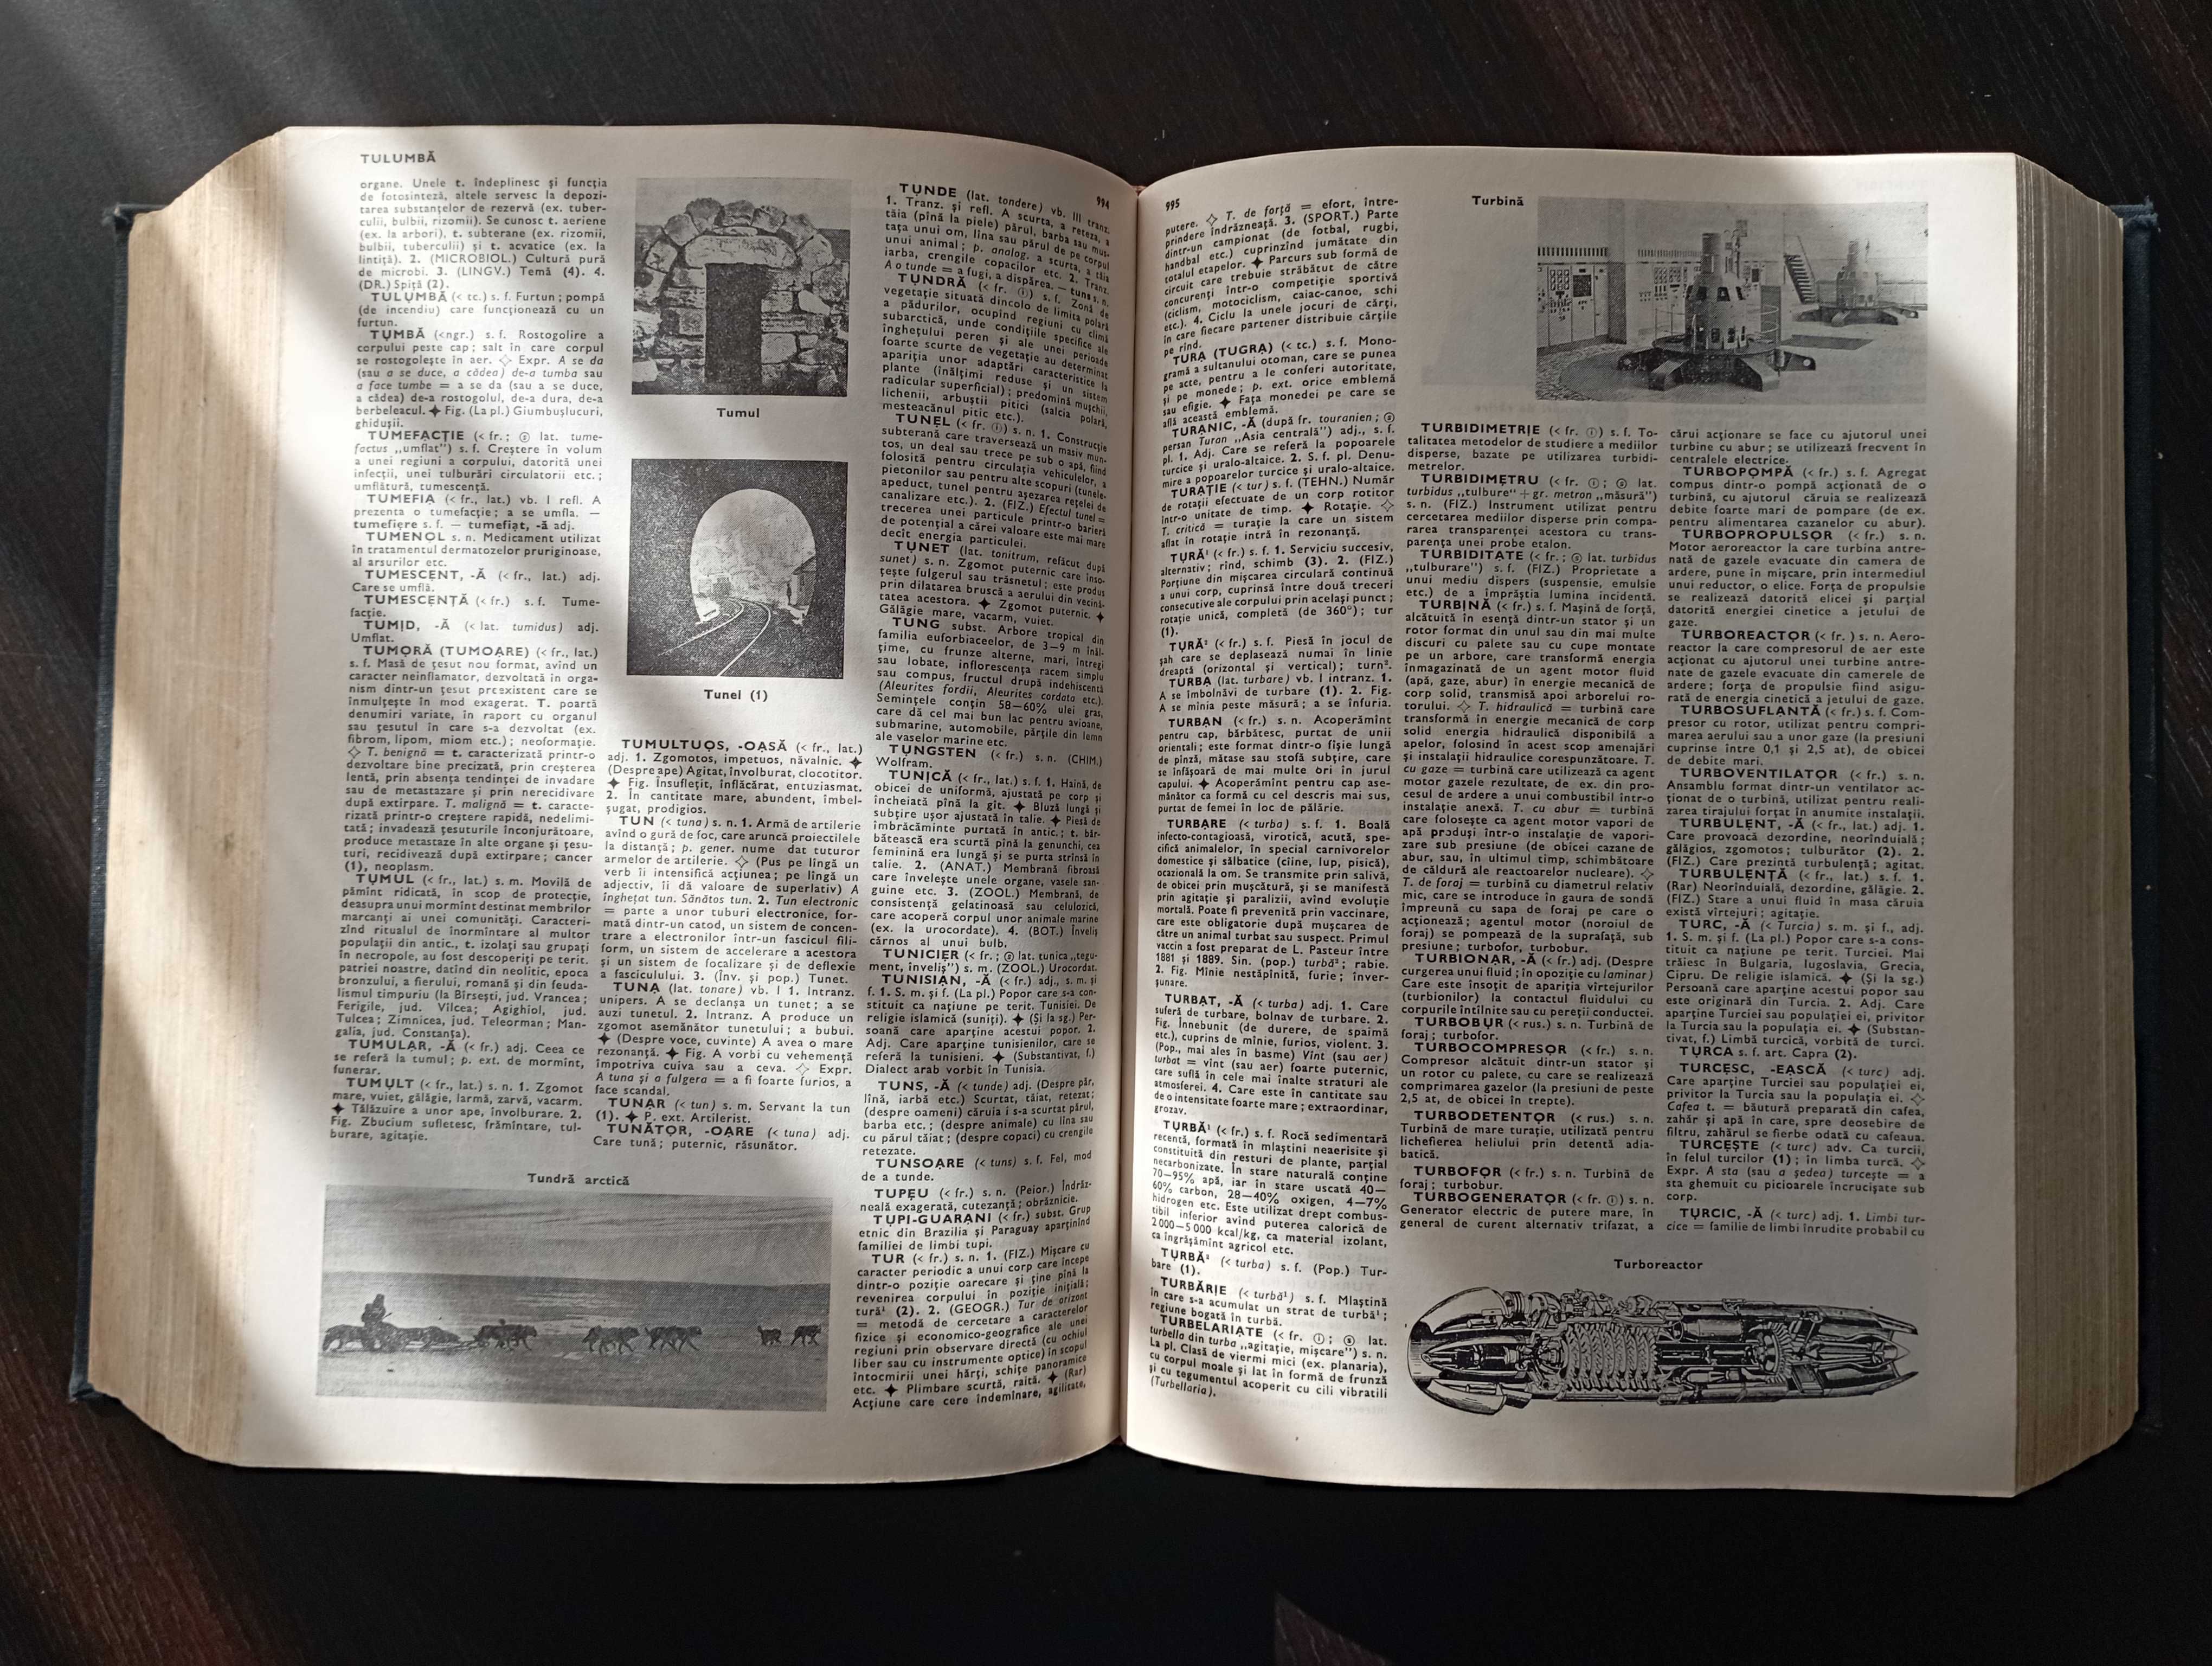 Mic dicționar enciclopedic, ediția a II-a, 1978